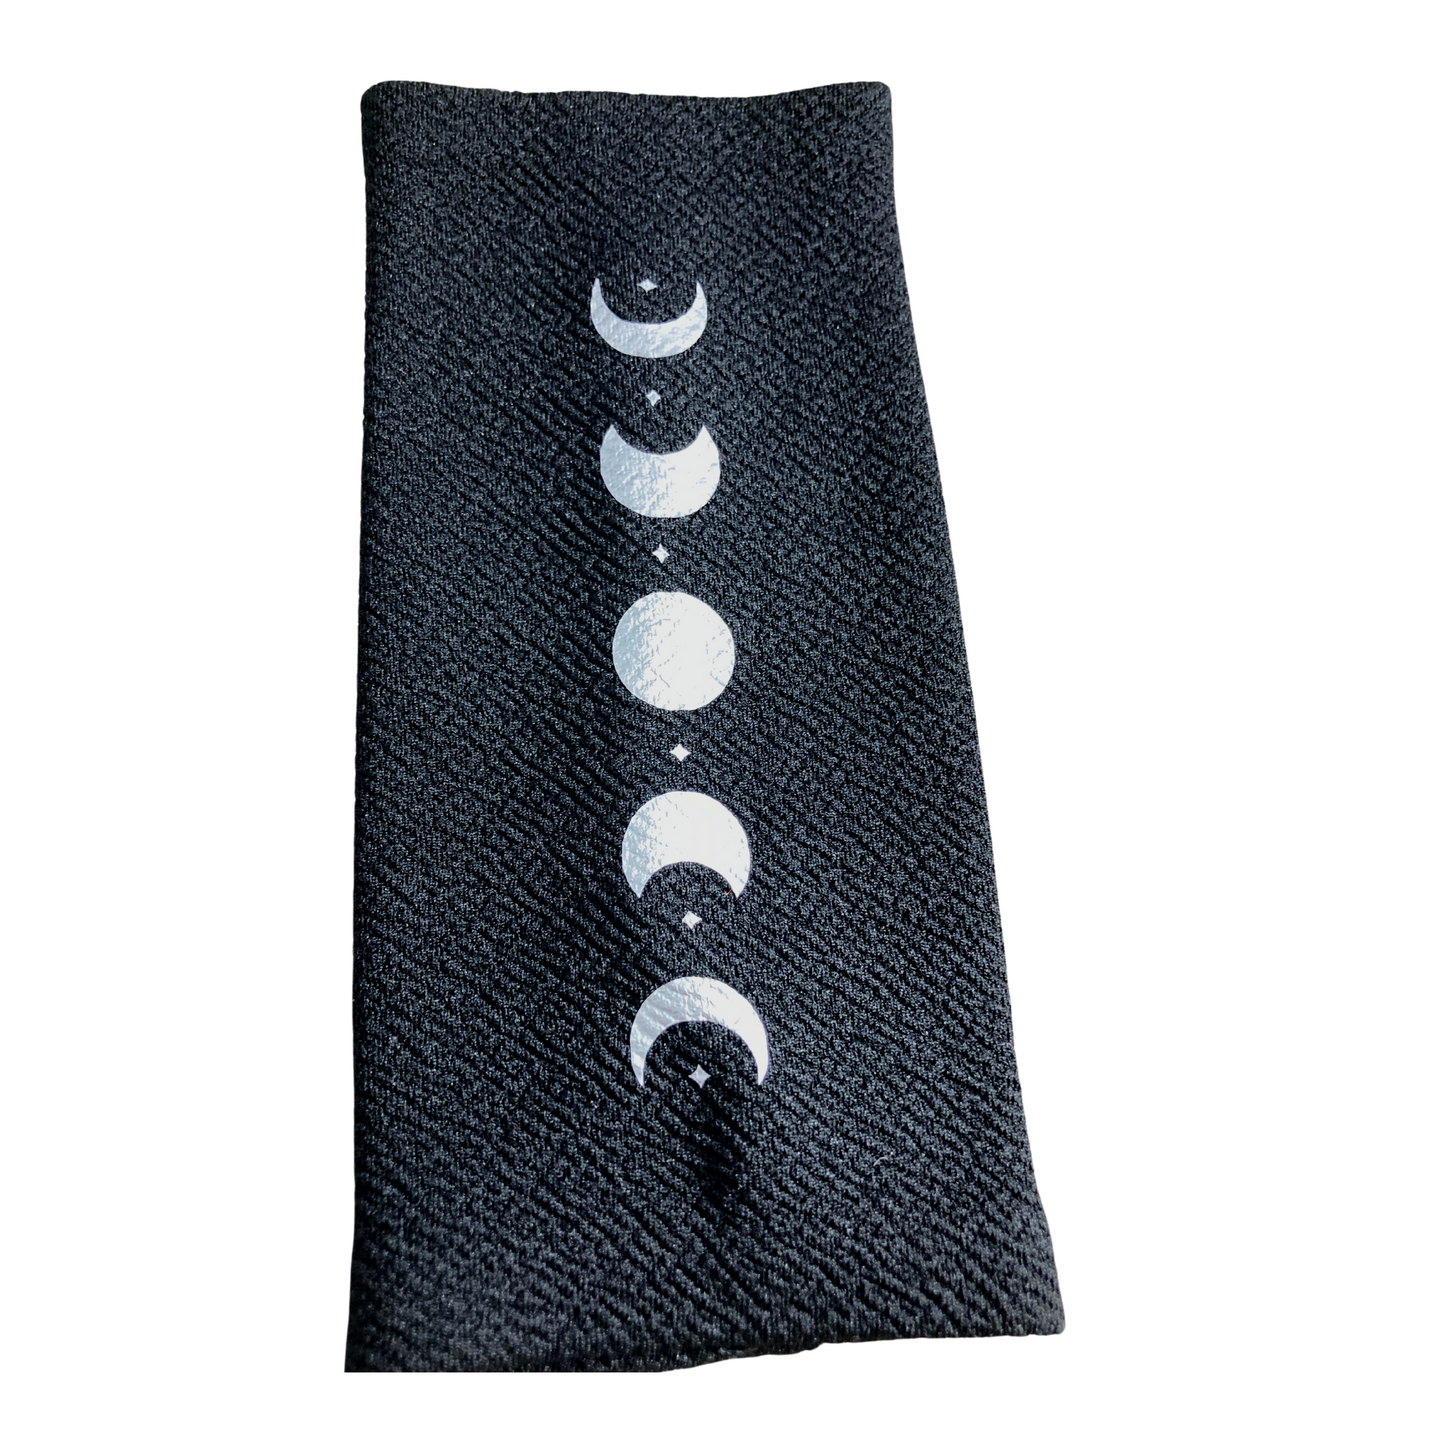 Fabric Bracelet Cuff - 16 Design Choices